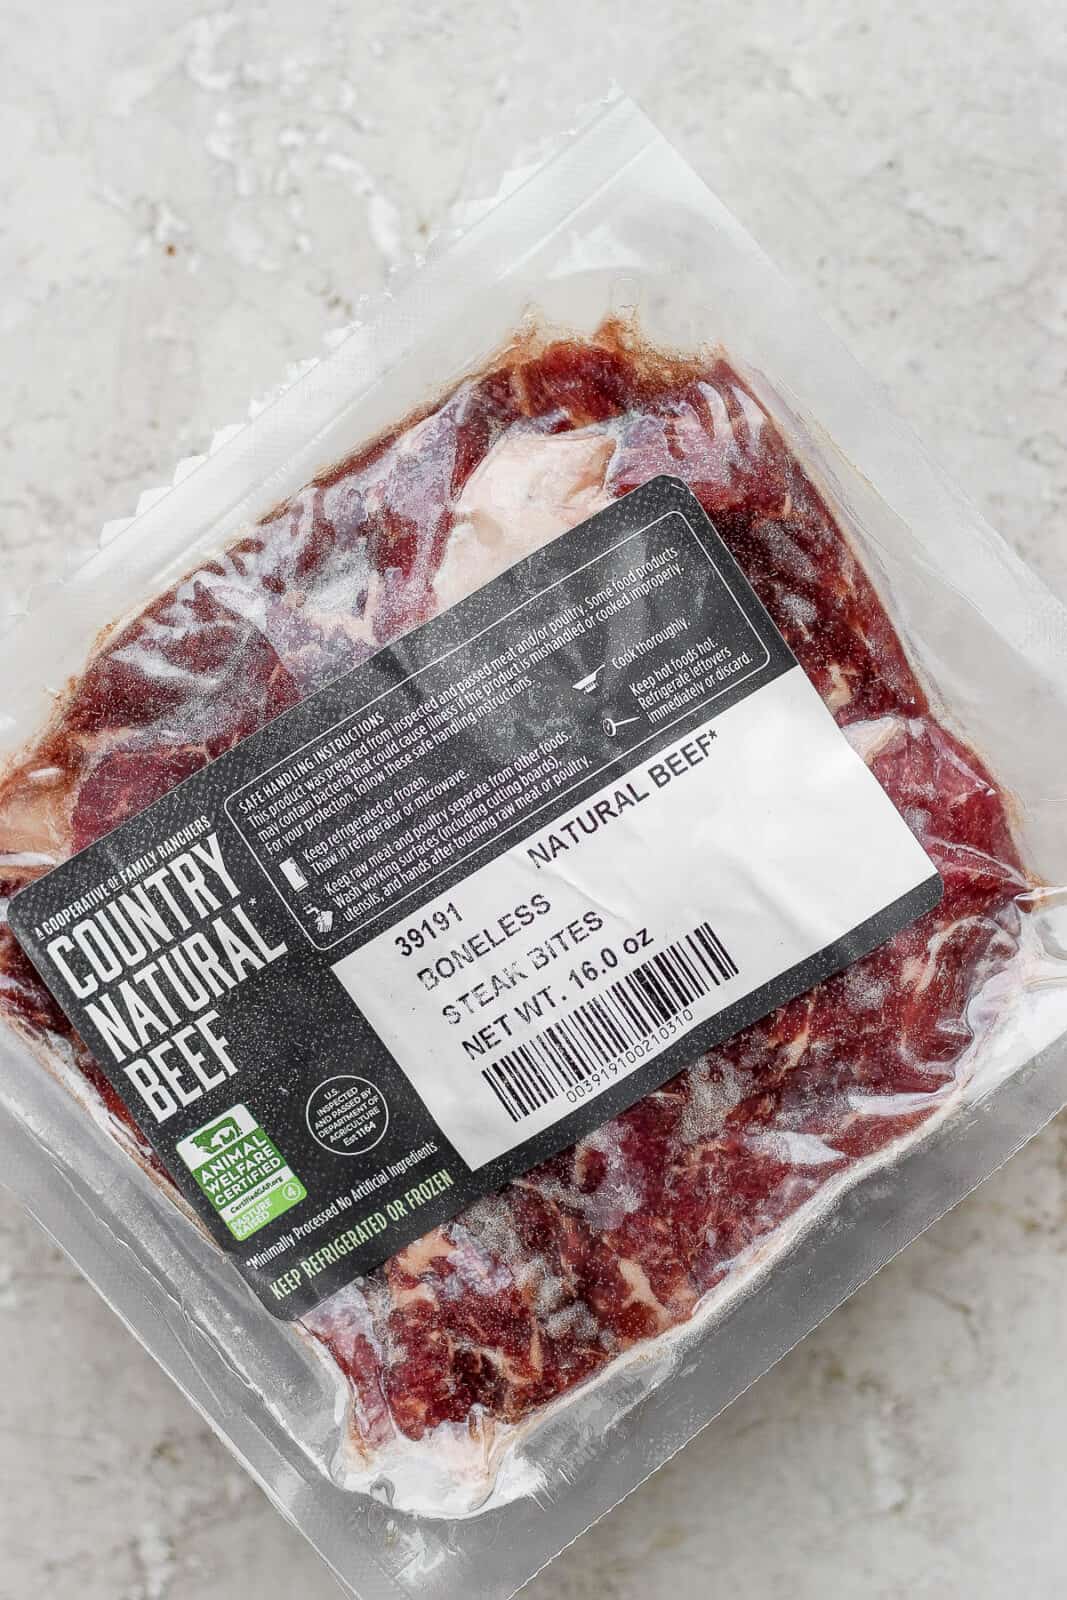 Package of Country Natural Beef Boneless Steak Bites.